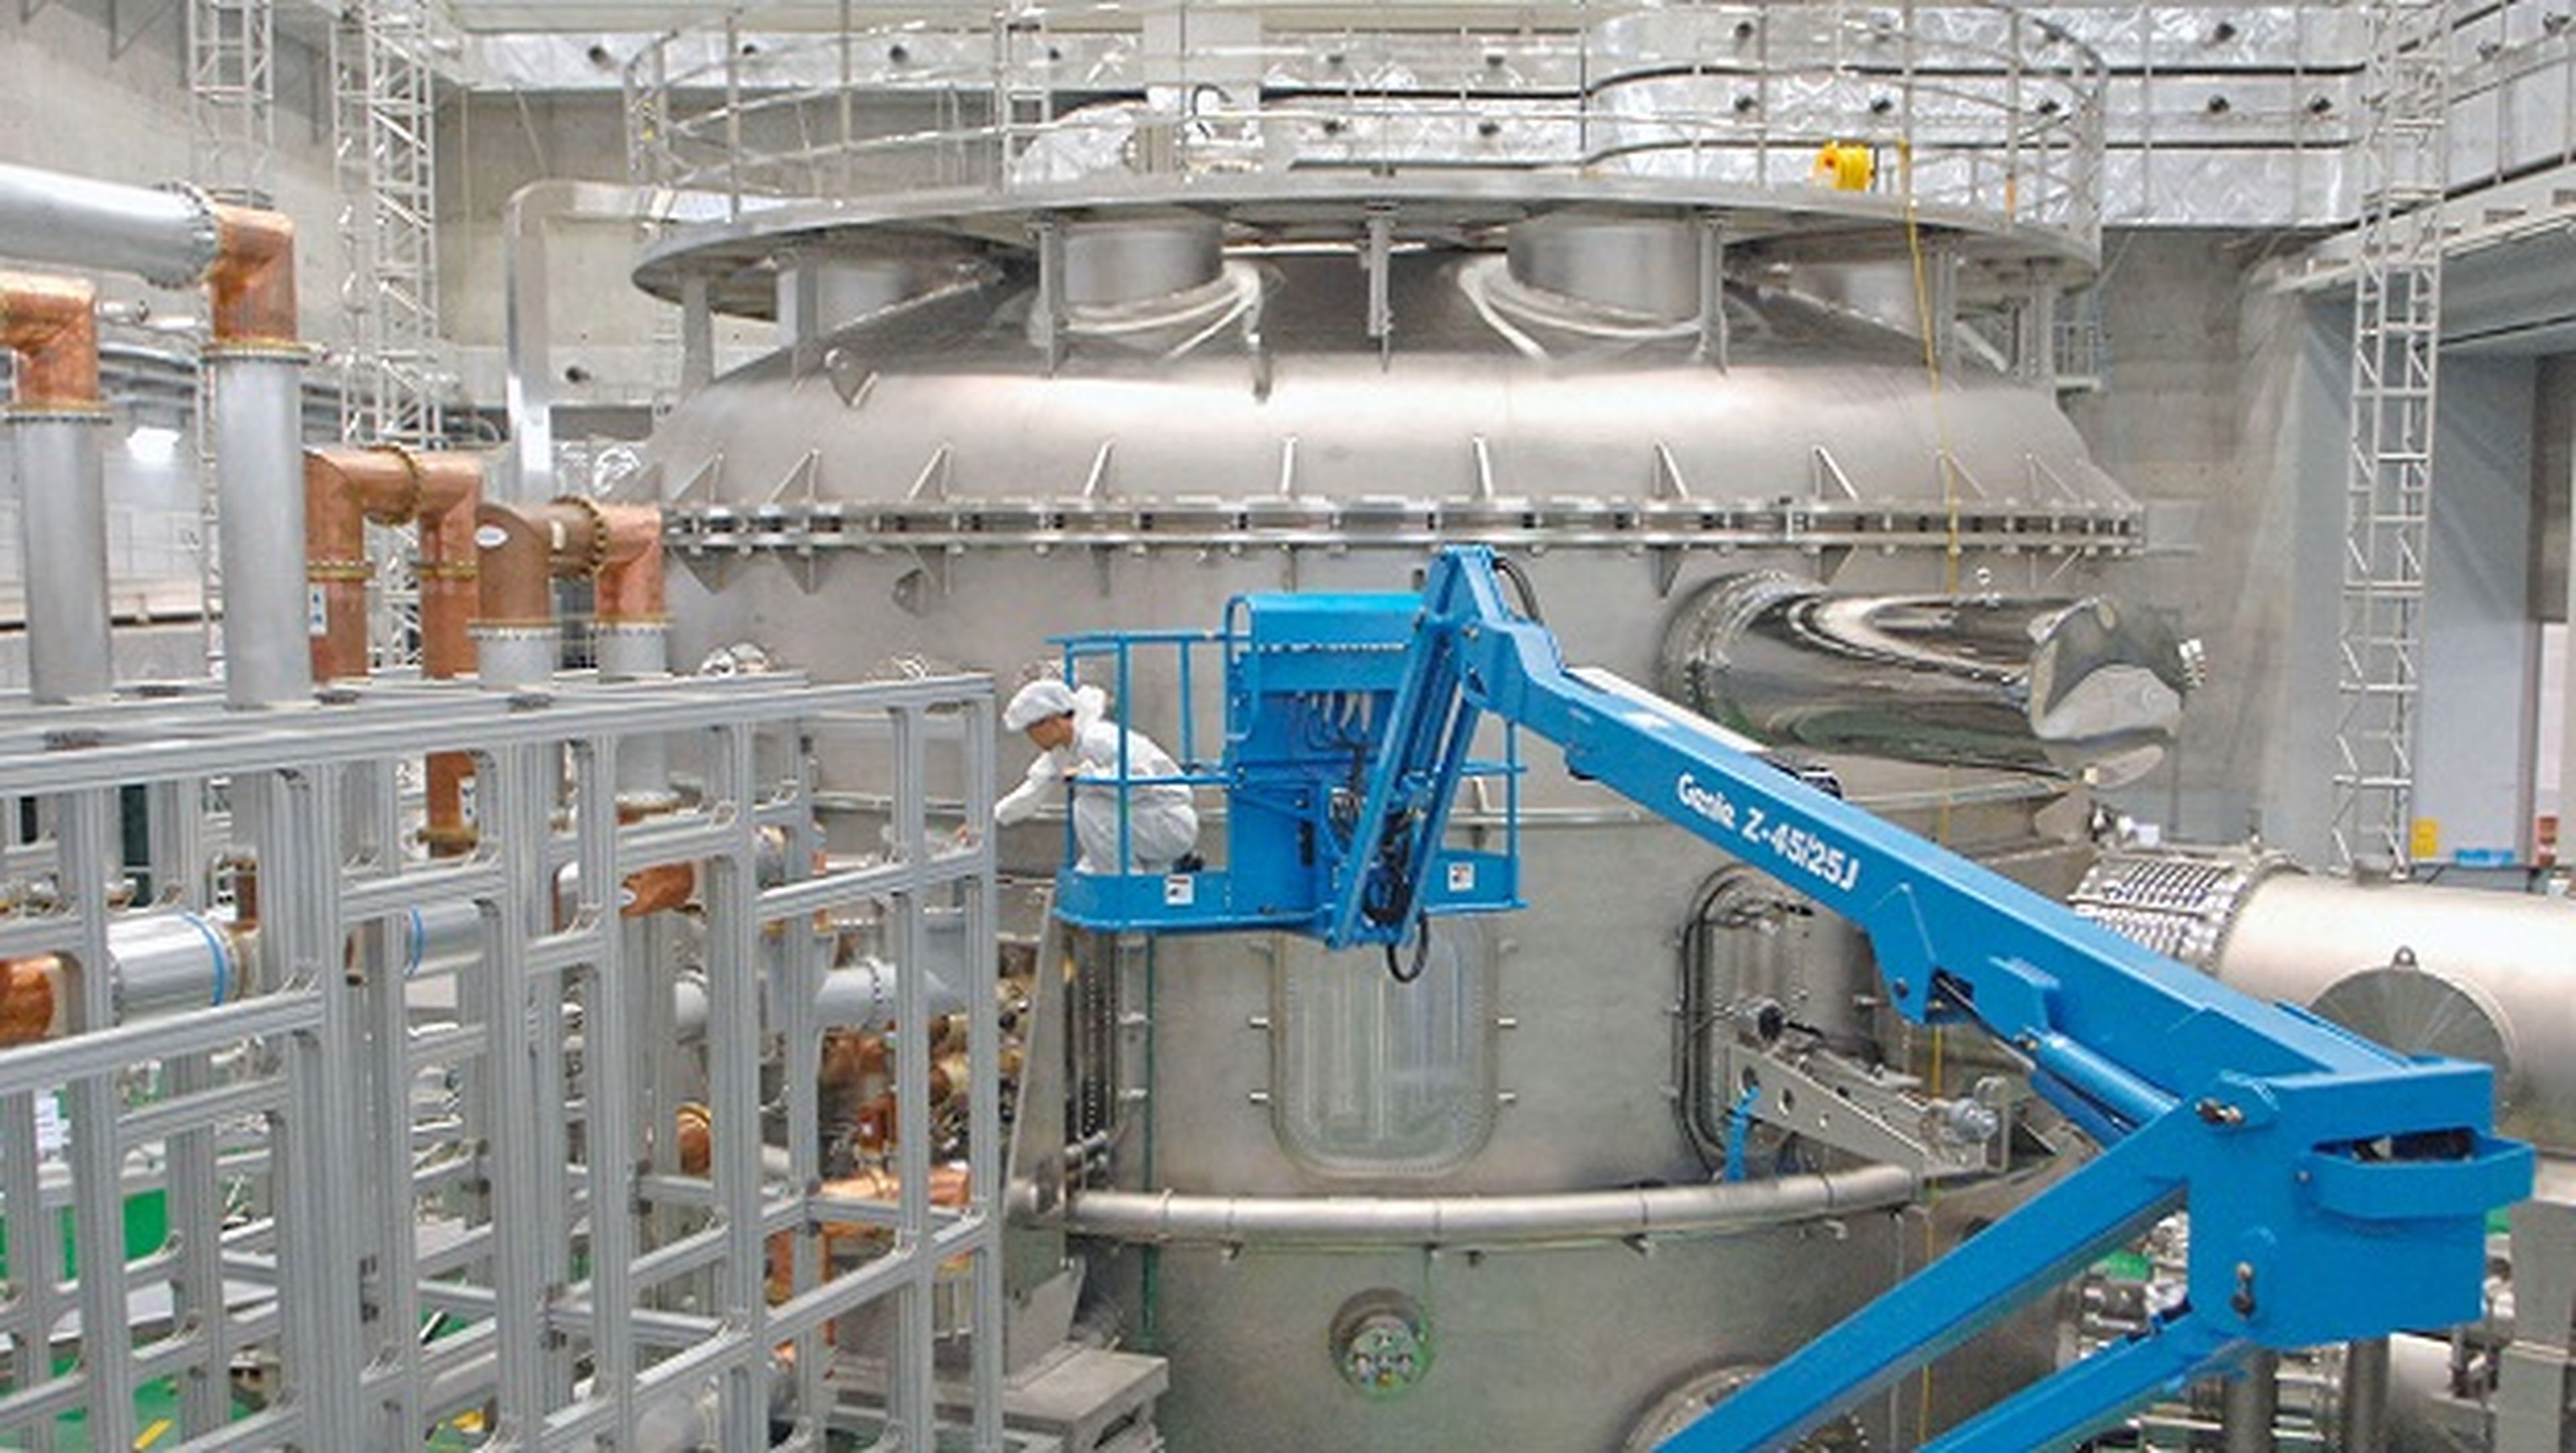 Baten récord de rendimiento de reactor de fusión